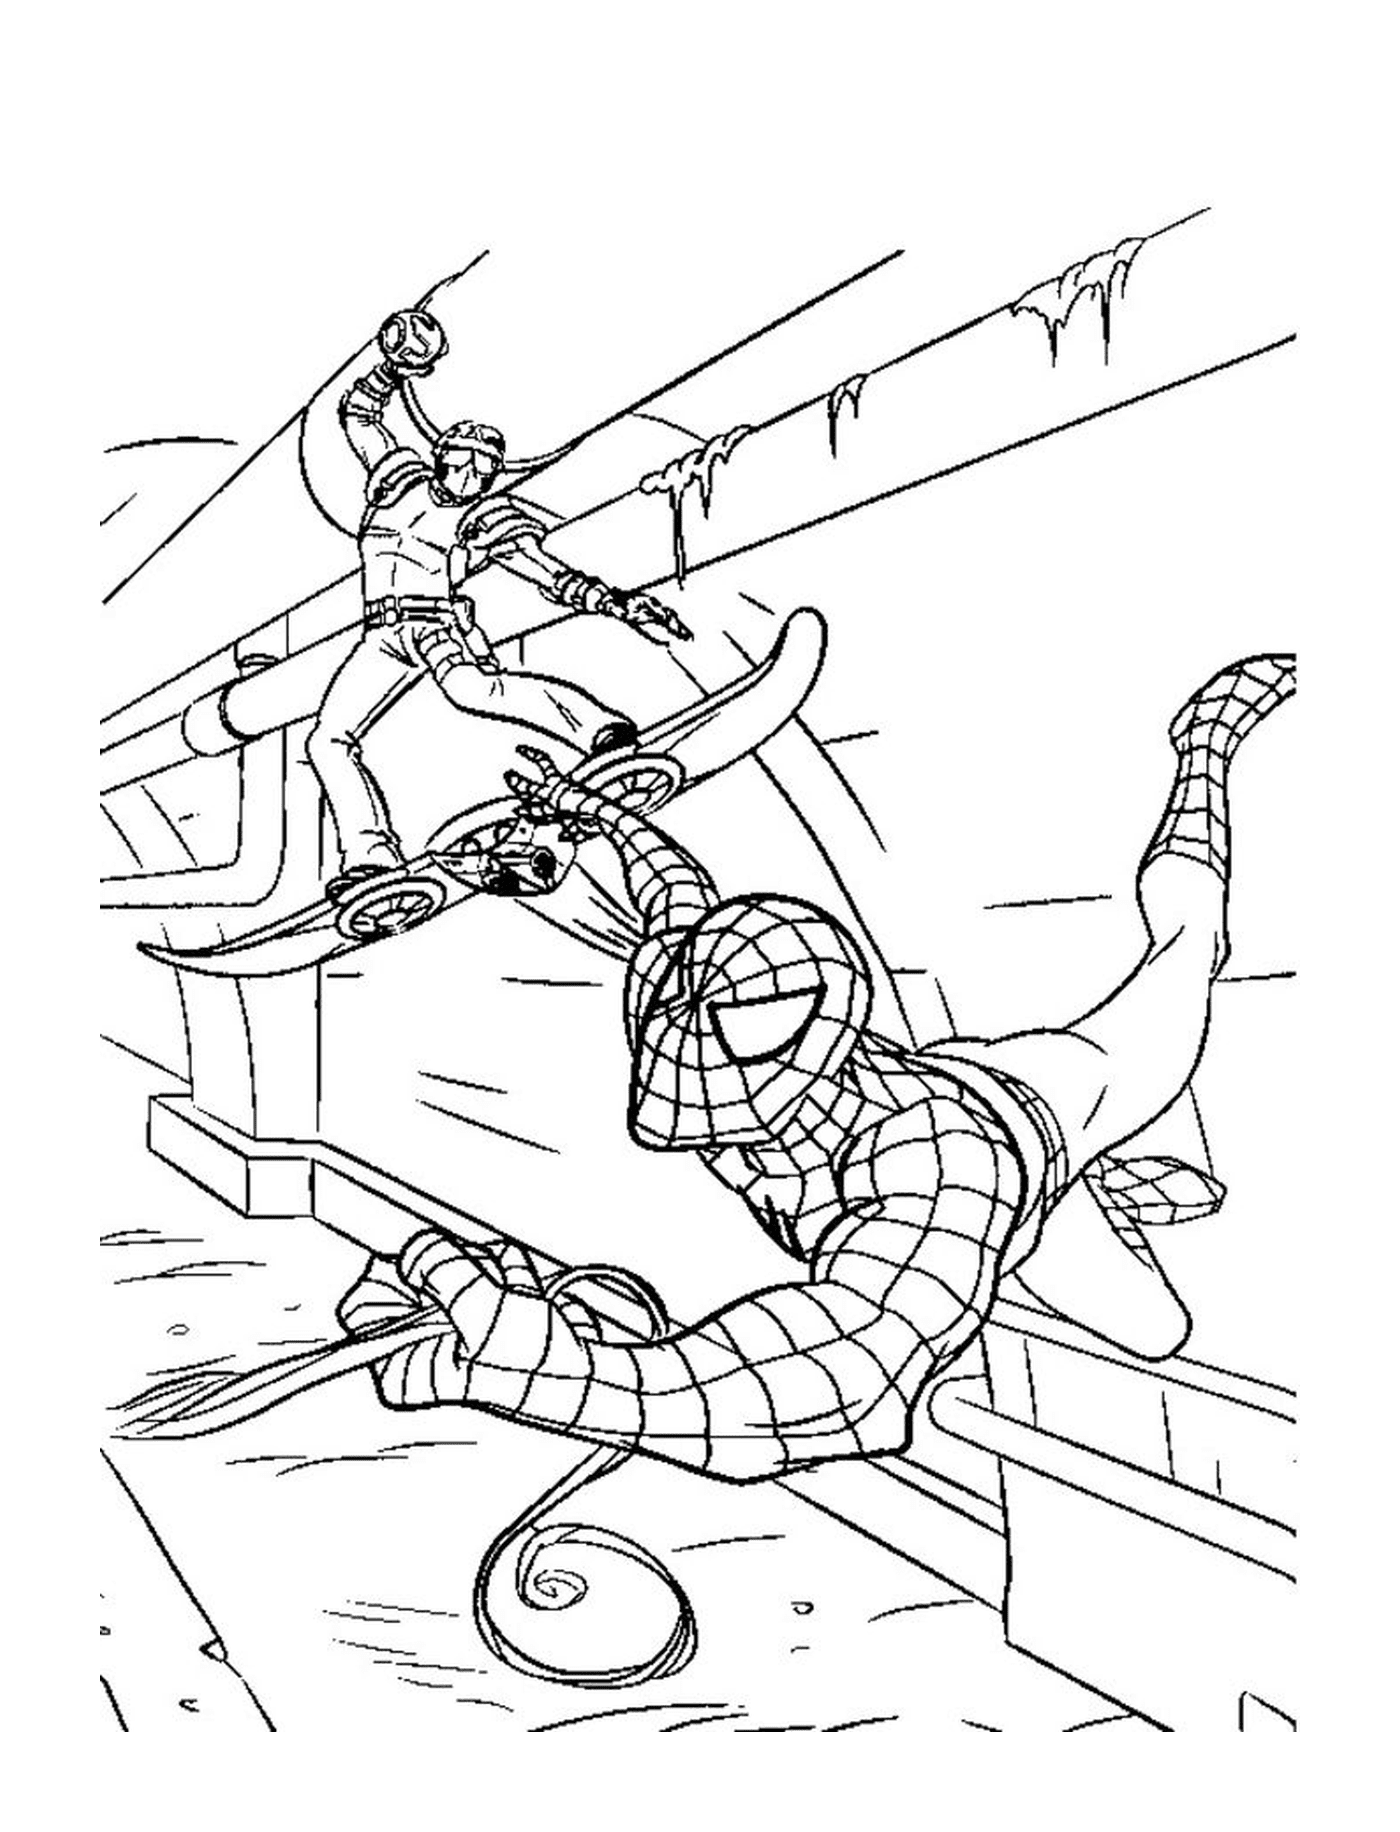  Spiderman skateboards 